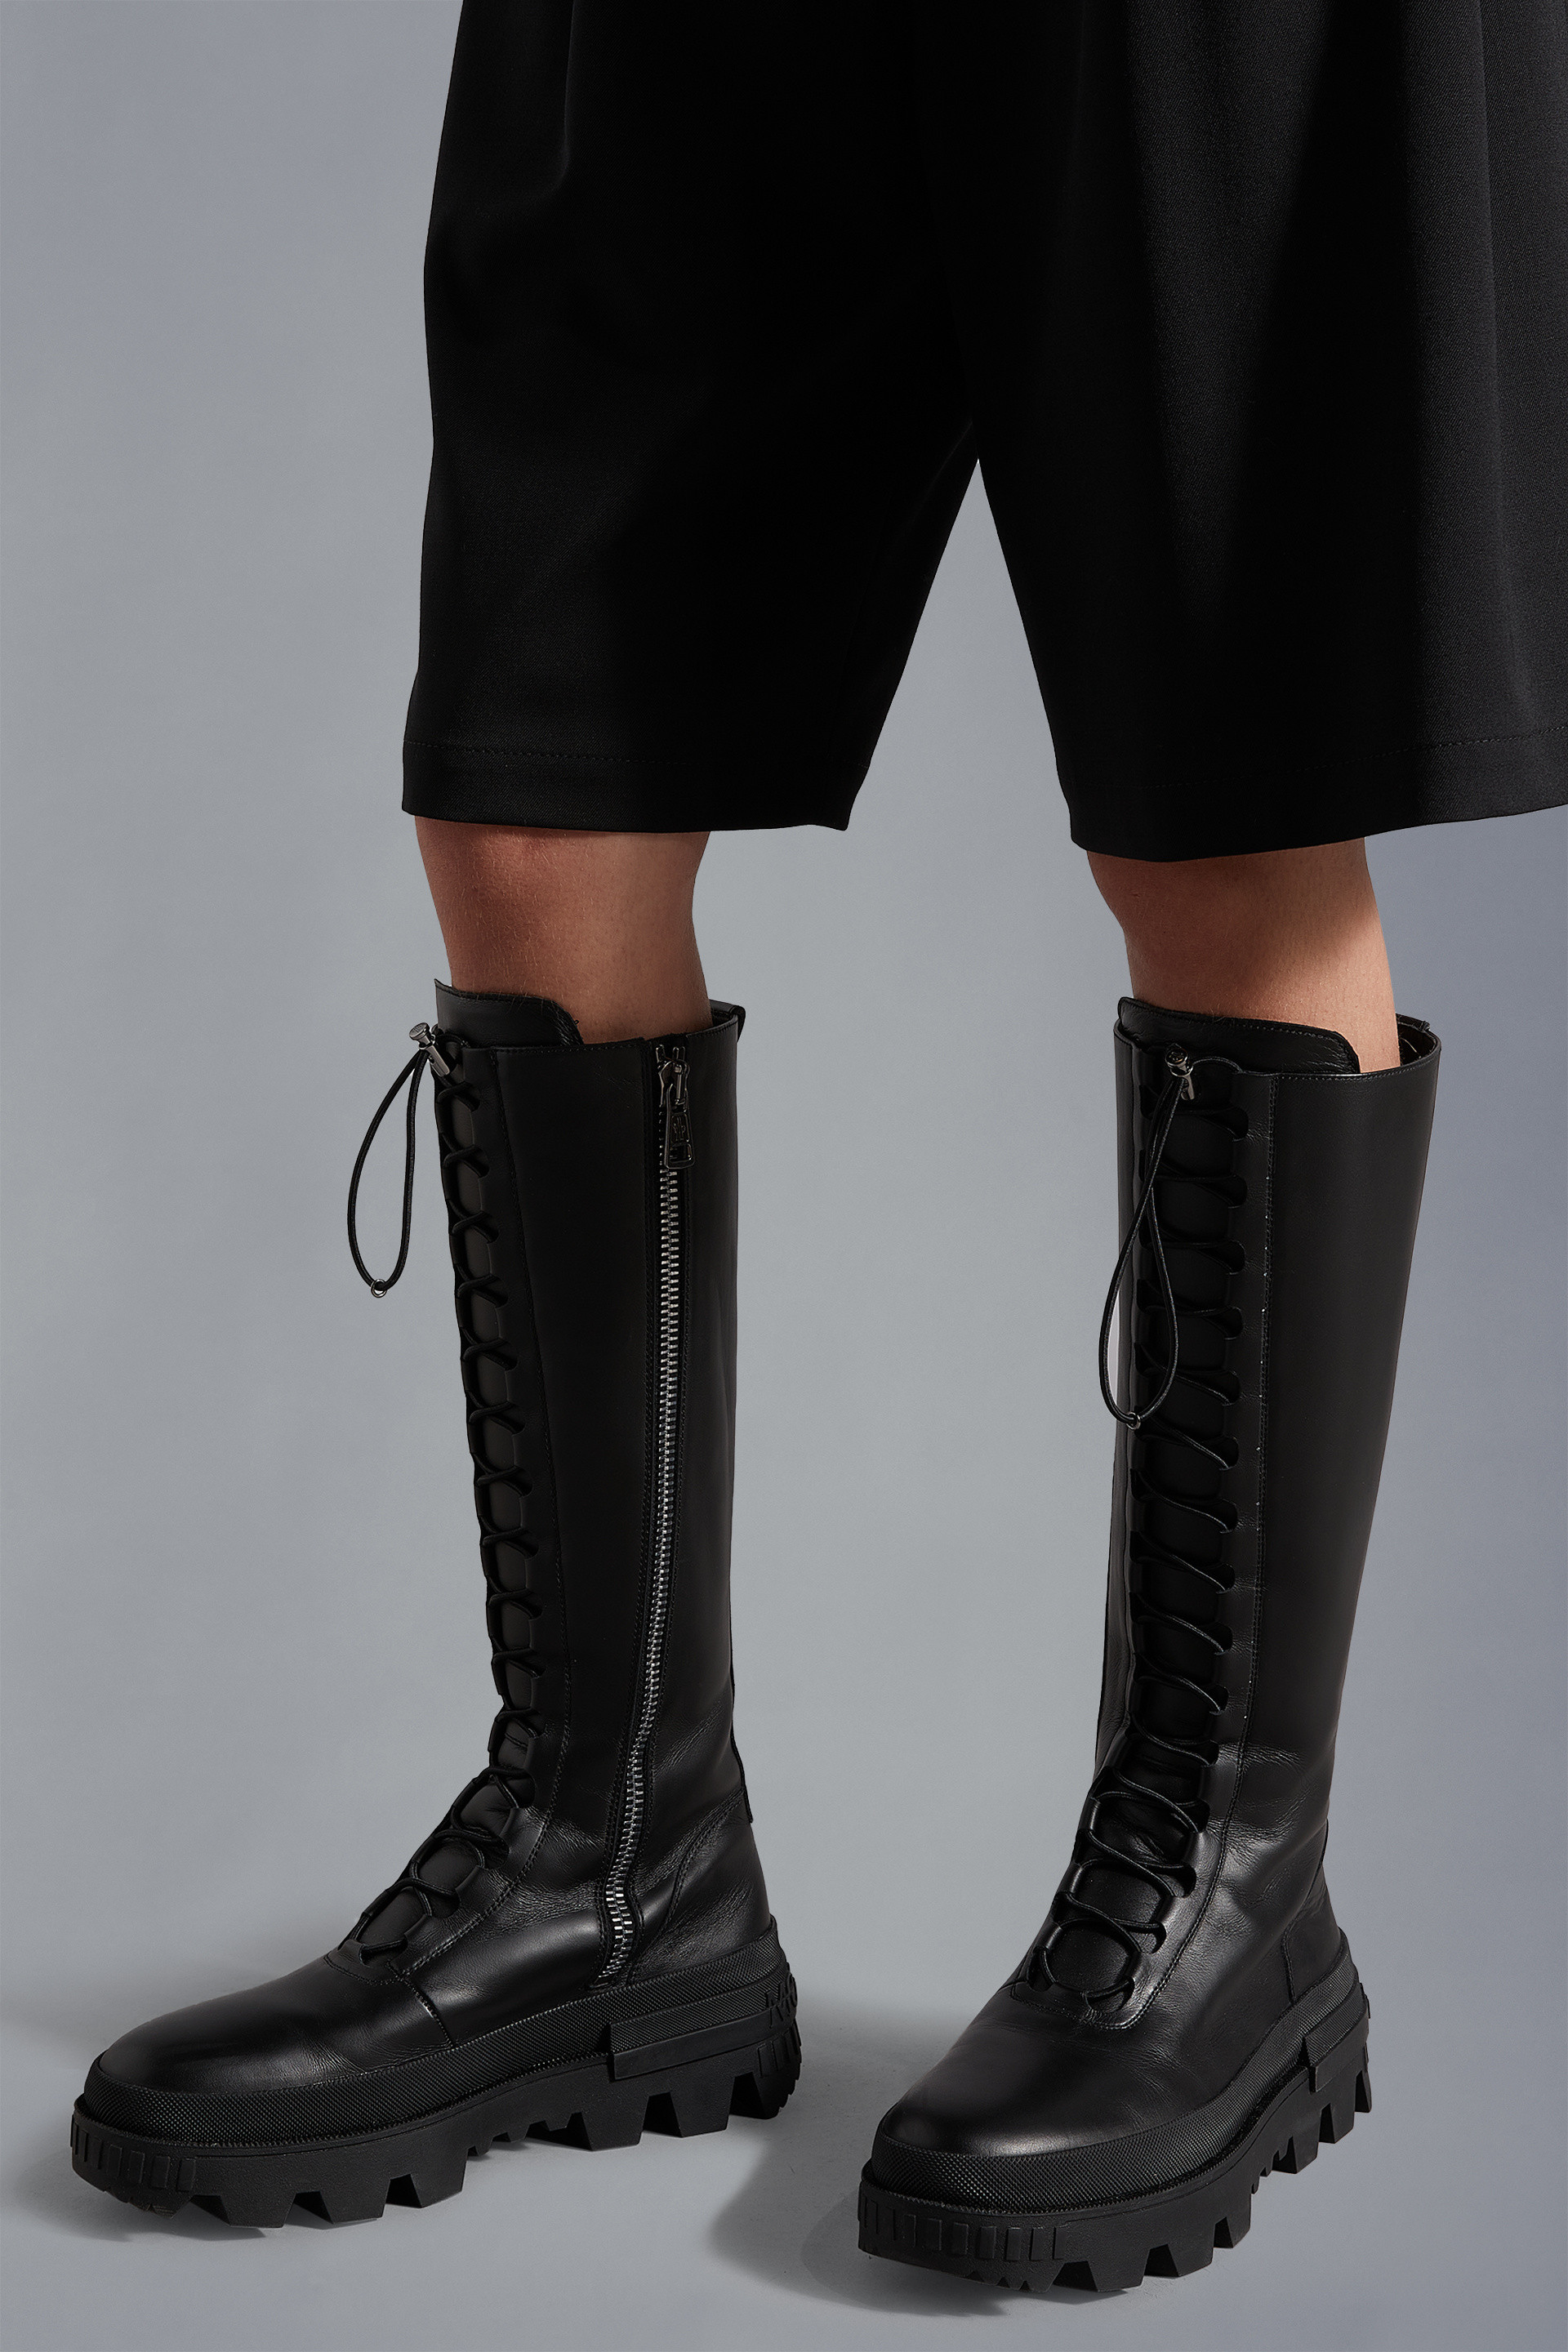 Hombre Zapatos de Botas de Botas informales Botines de caña alta Moncler de Cuero de color Negro para hombre 